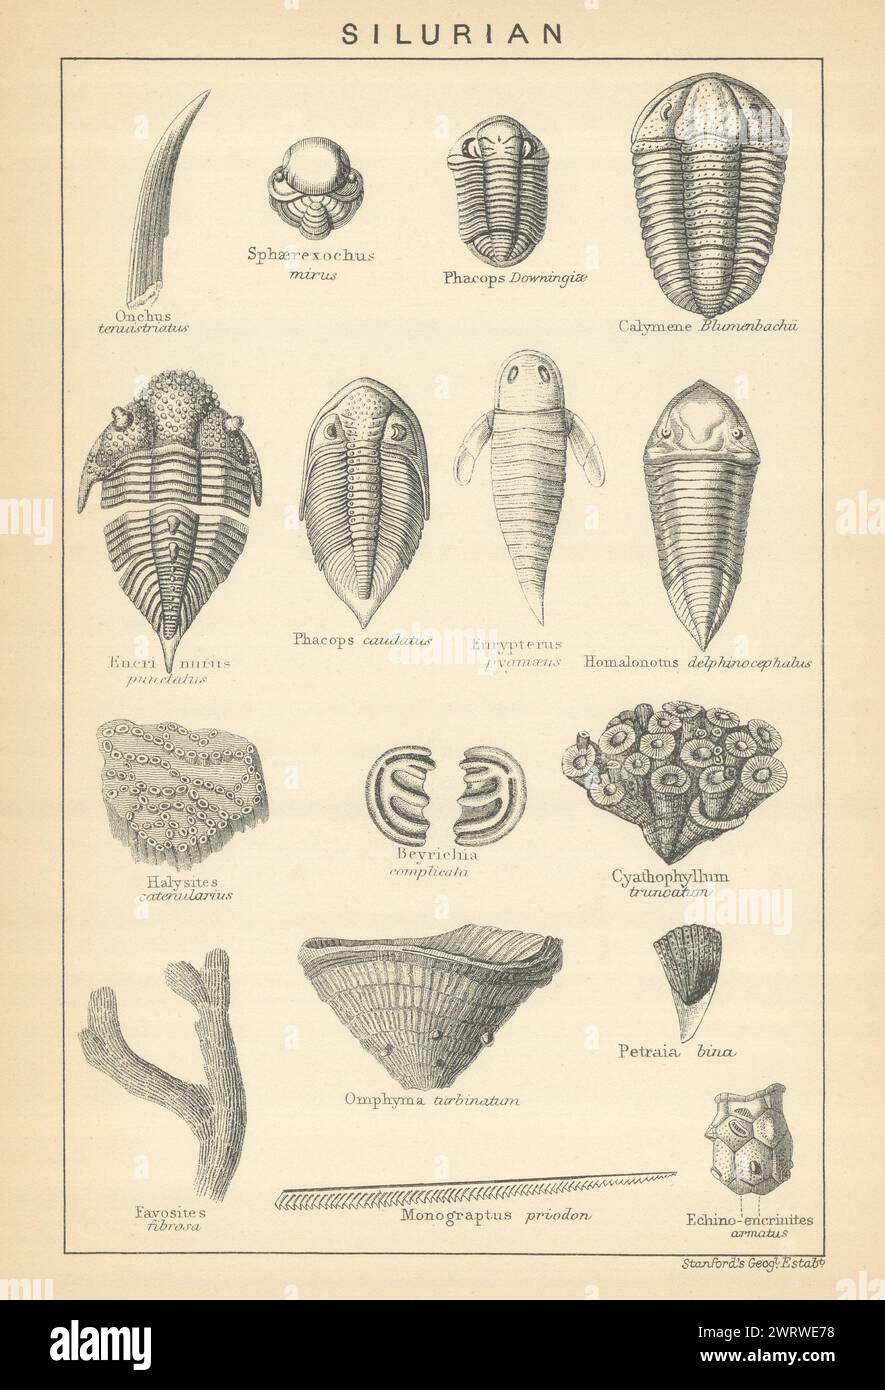 BRITISH FOSSILS. Silurian - Llandovery, Wenlock & Ludlow Series. STANFORD 1904 Stock Photo